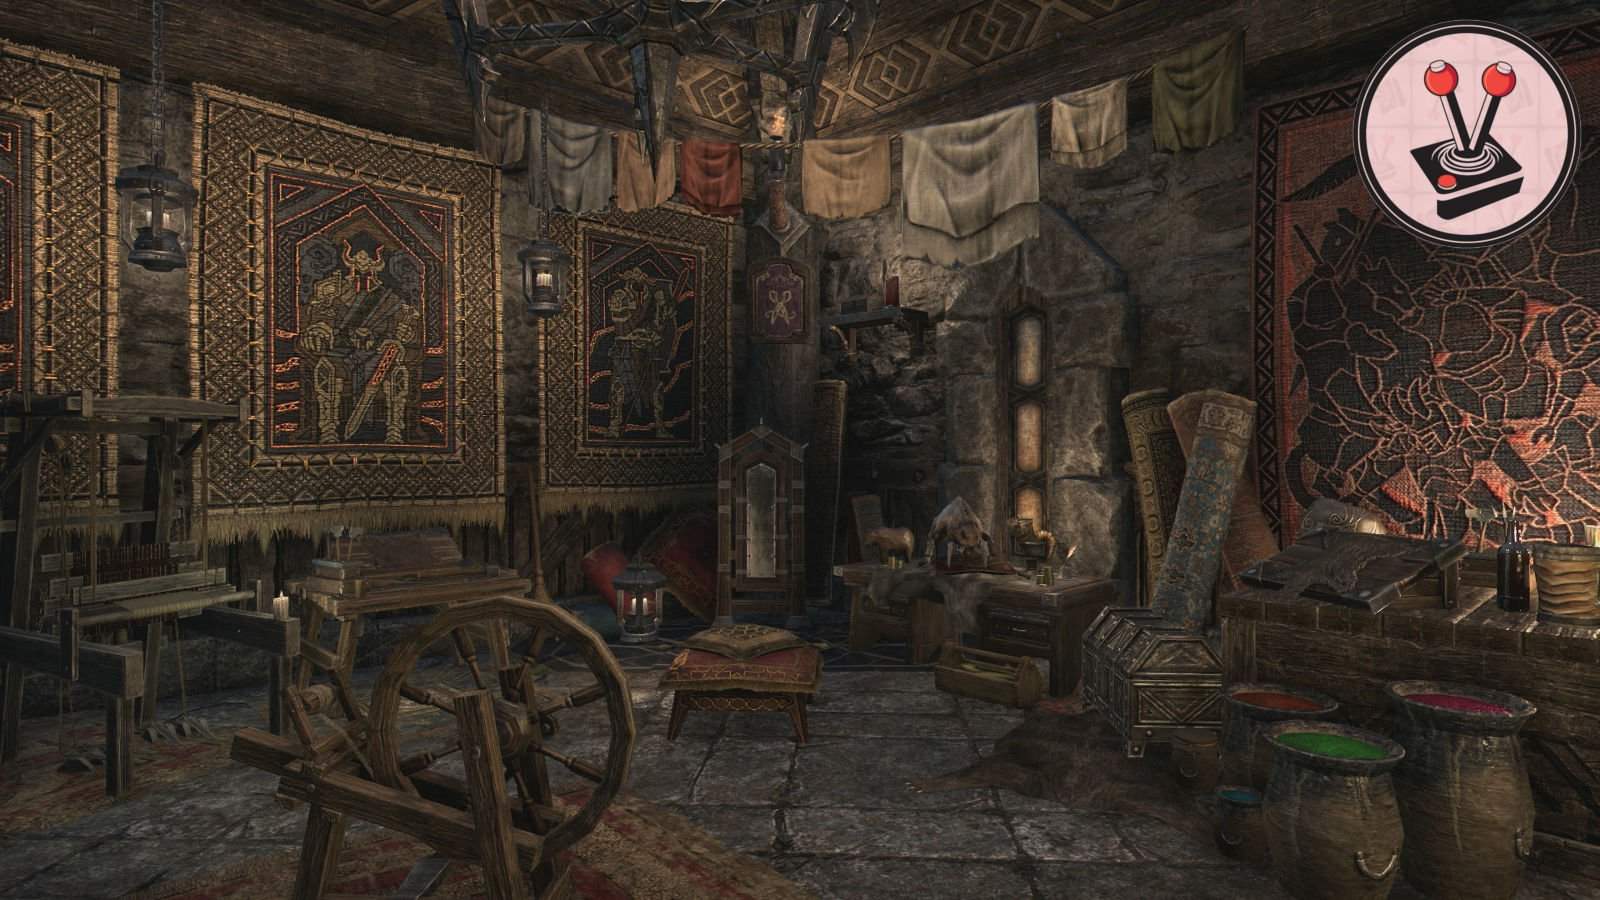 Vamers - FYI - Video Gaming - The Elder Scrolls gets player housing in new Homestead update - 02